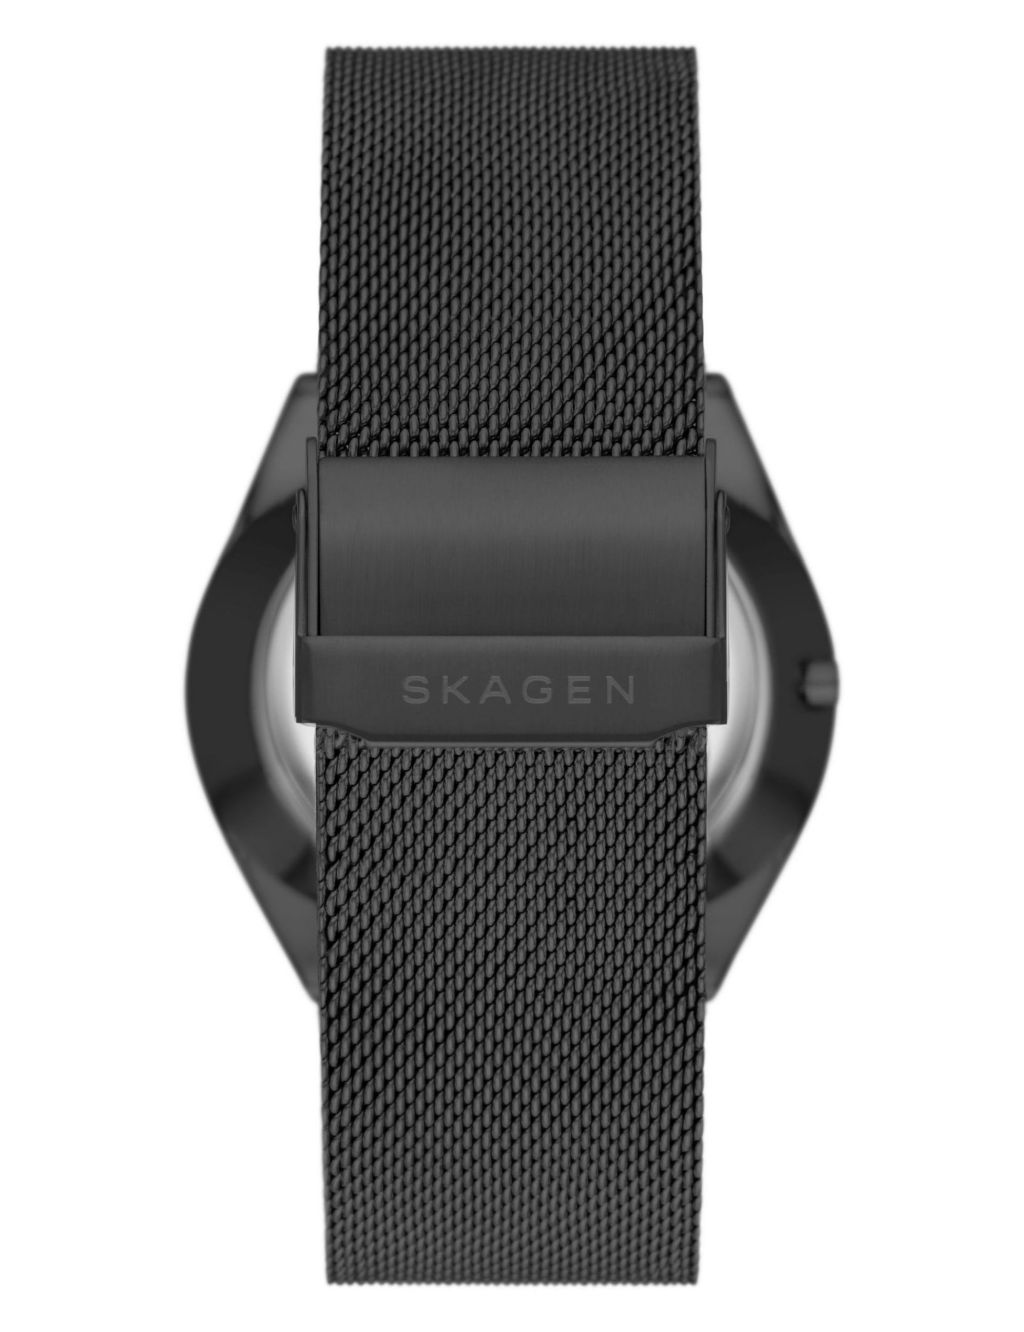 Skagen Grenen Black Stainless Steel Bracelet Solar Powered Watch image 2